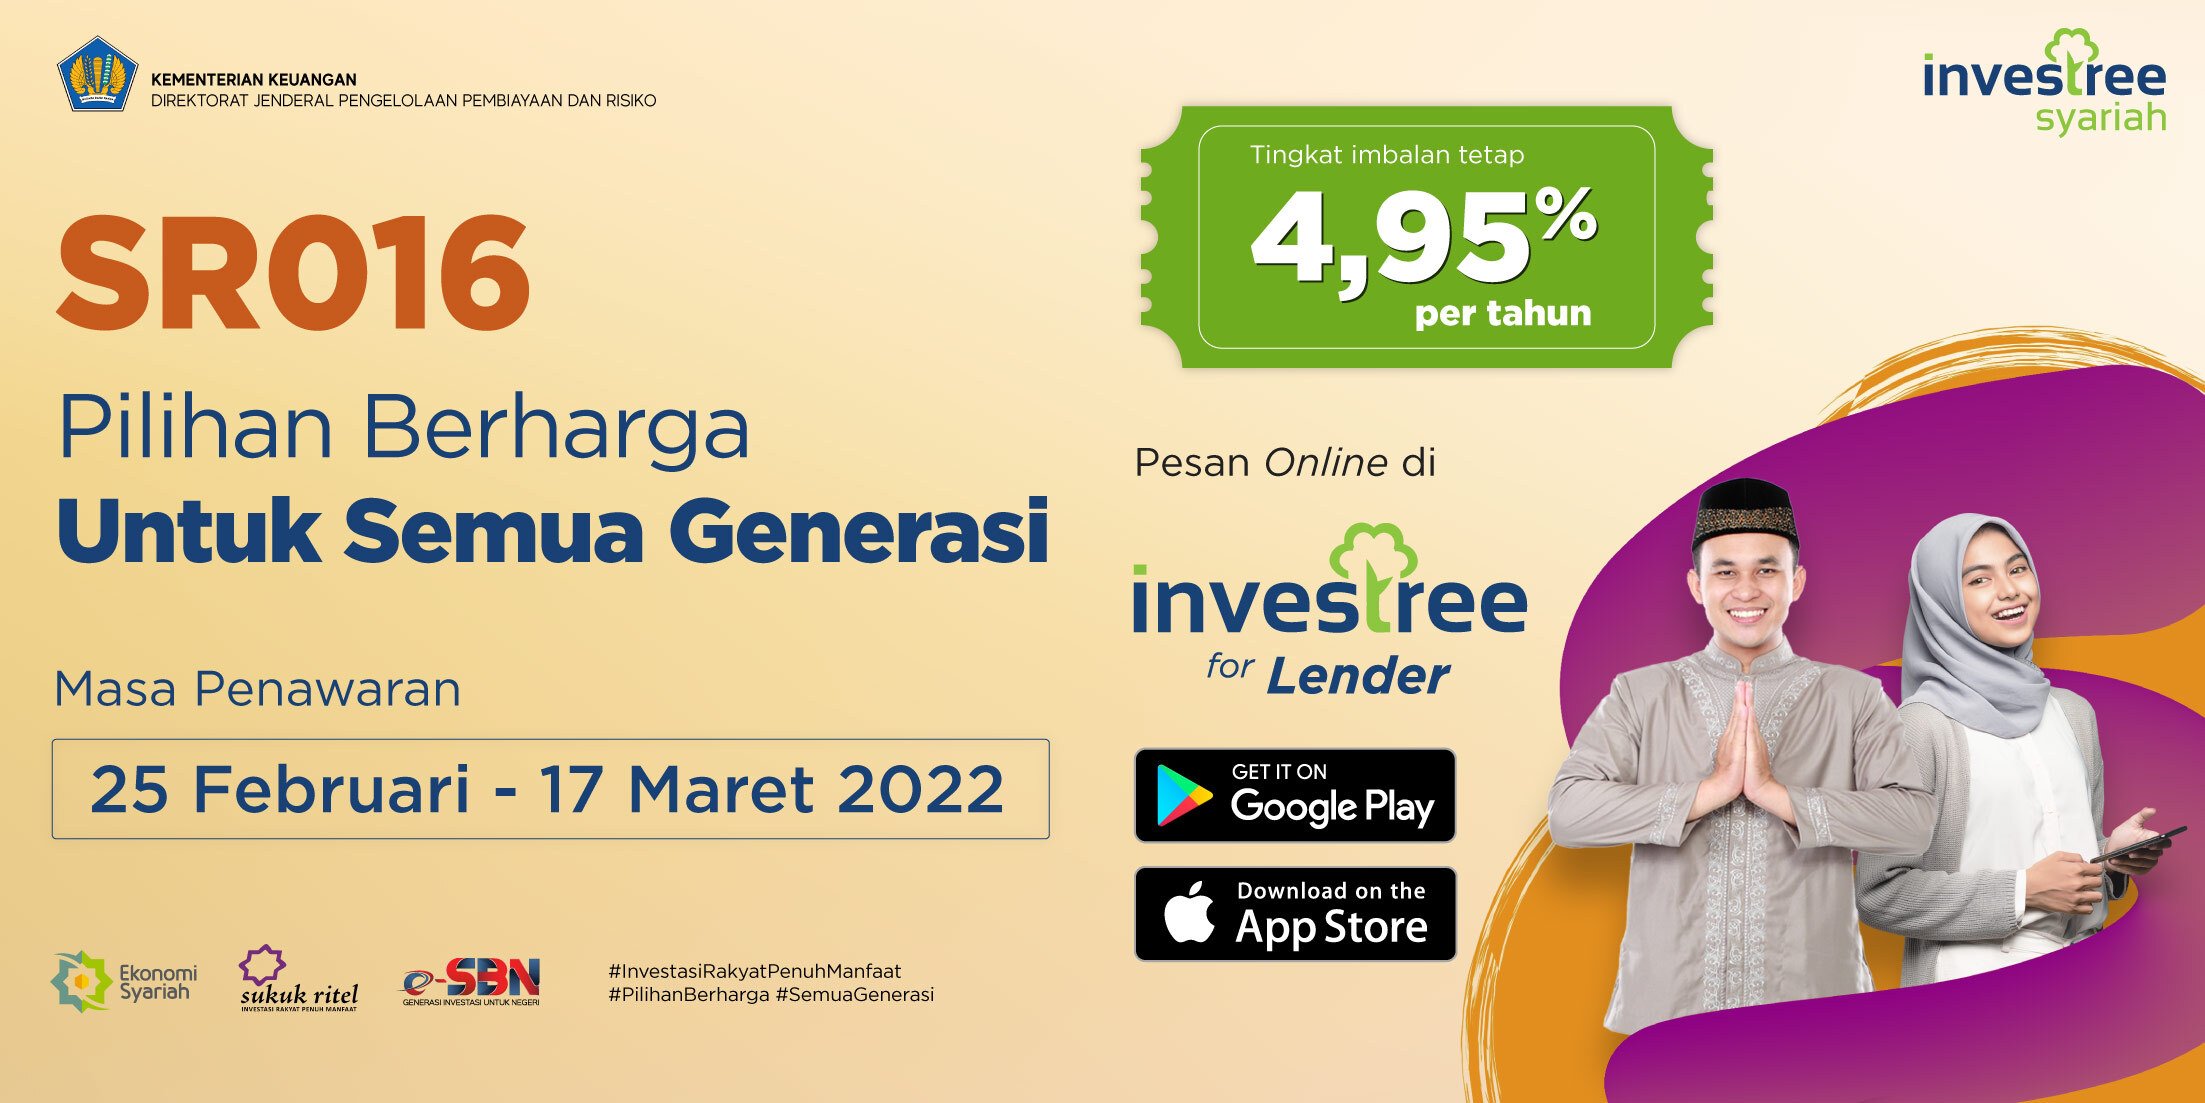 Investree Syariah Optimistis Hadapi 2022, Angka Penyaluran Pembiayaan Naik 50% YOY dan Pasarkan SR016